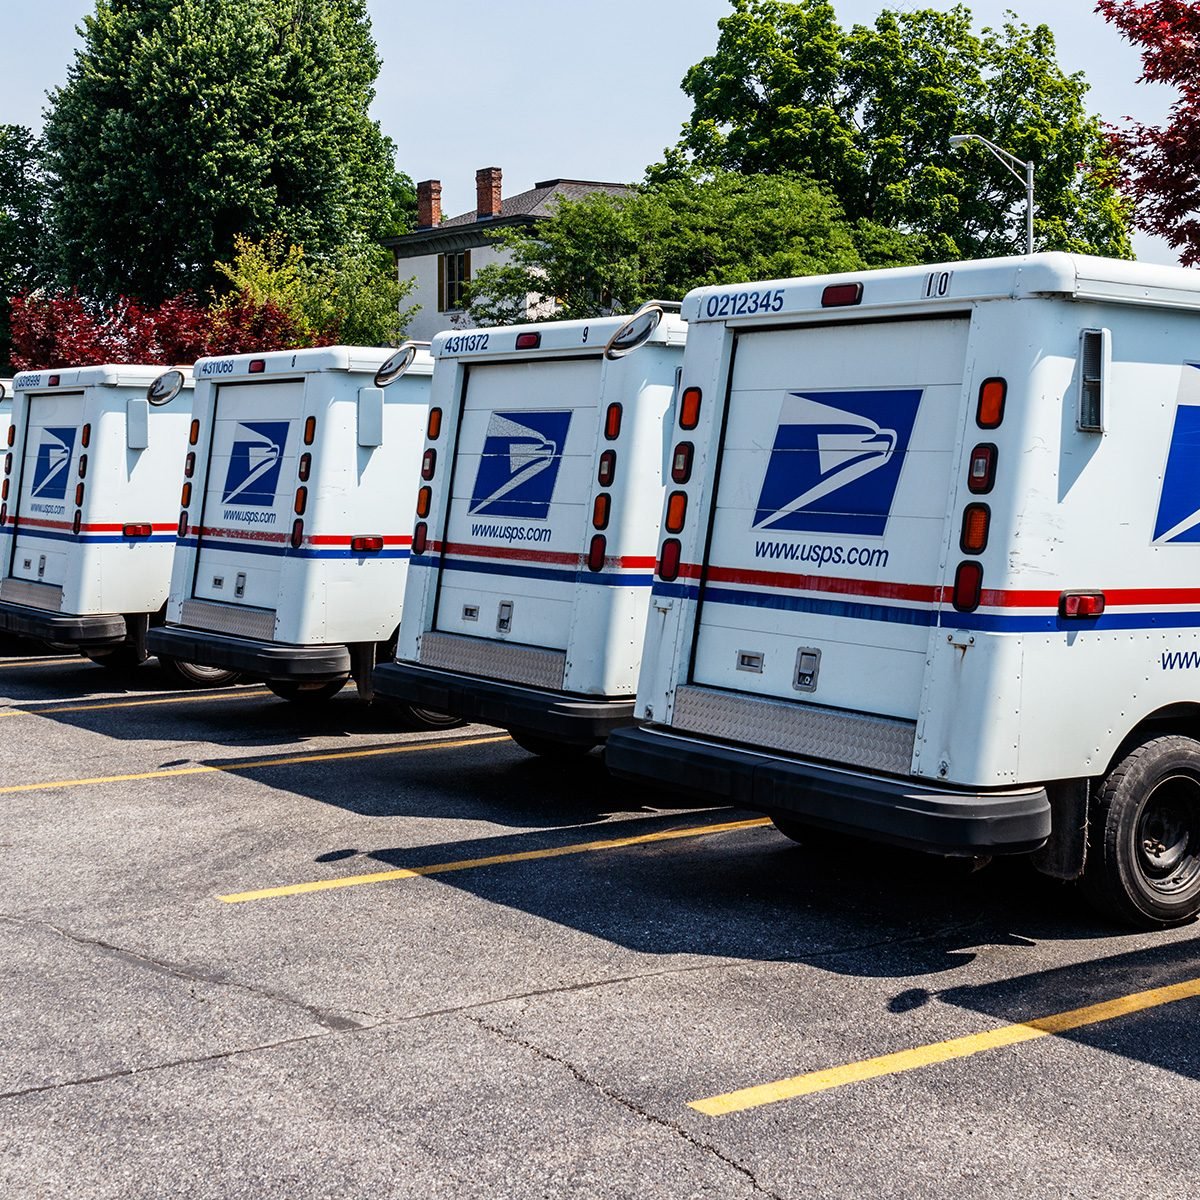 USPS Post Office Mail Trucks.